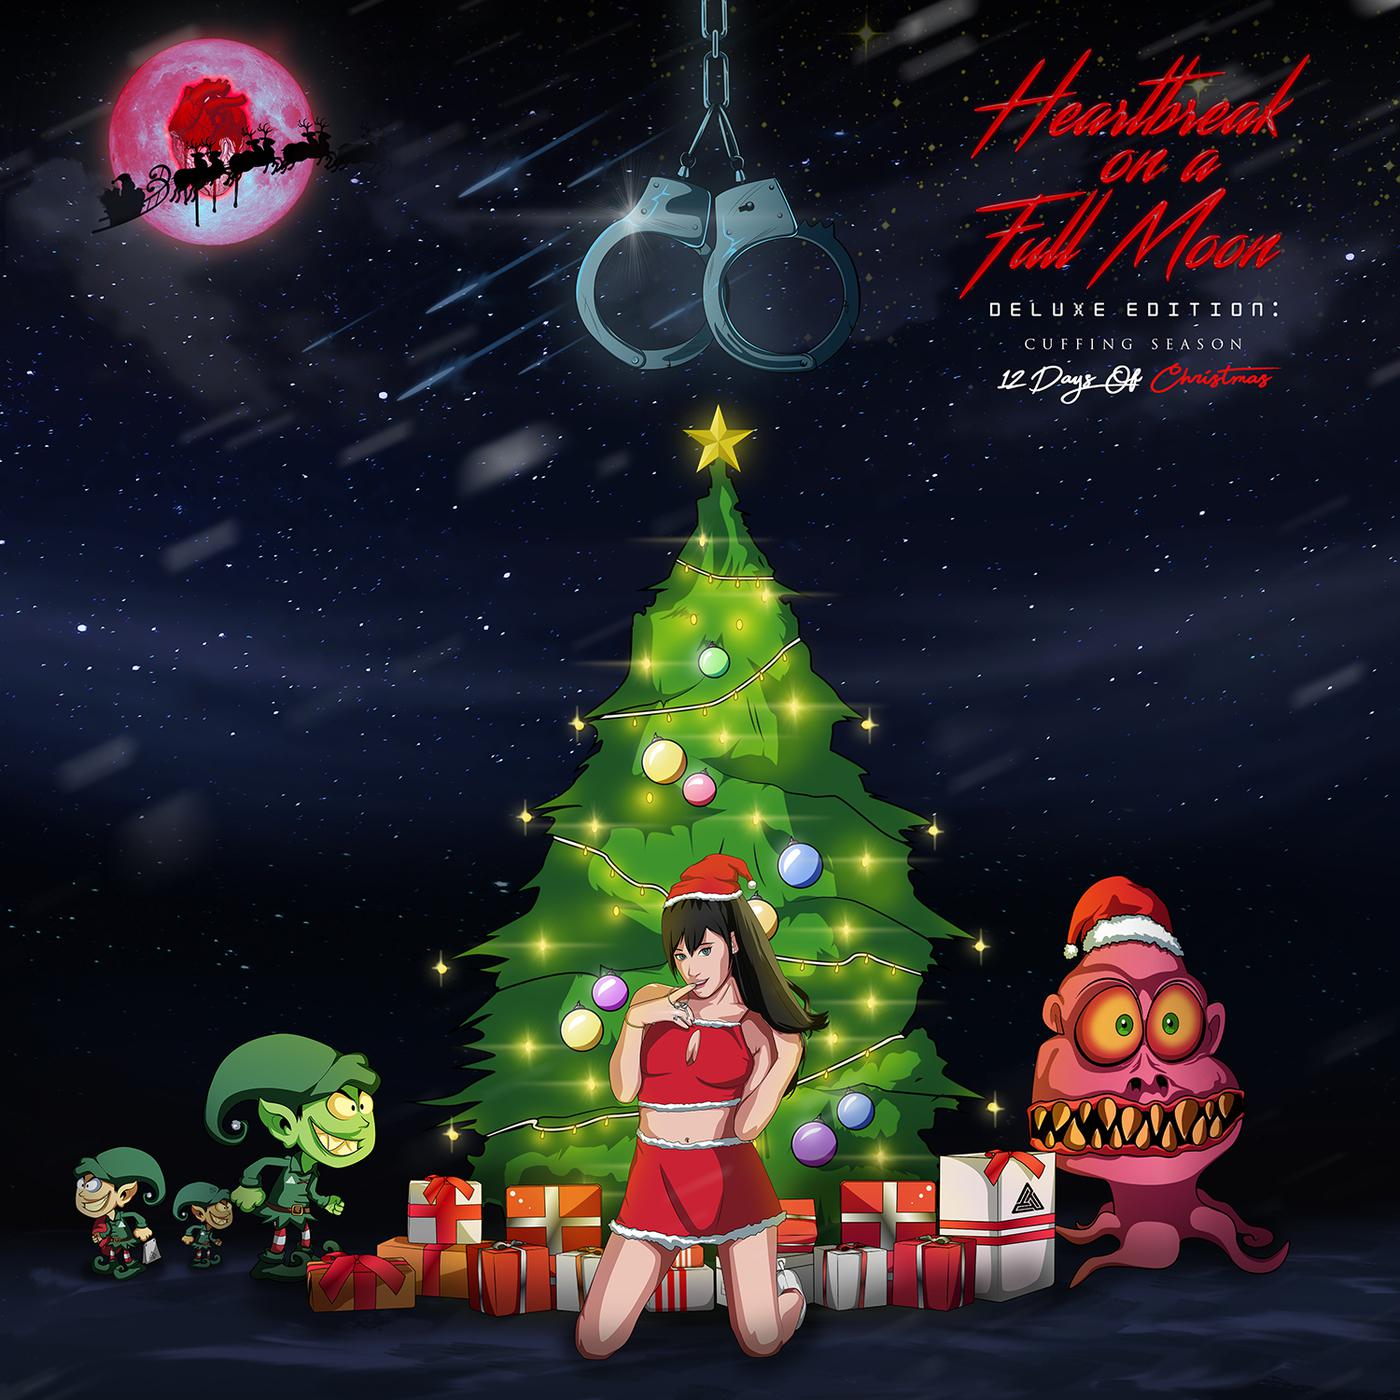 This X-Mas歌词 歌手Chris Brown / Ella Mai-专辑Heartbreak On A Full Moon Deluxe Edition: Cuffing Season - 12 Days Of Christmas-单曲《This X-Mas》LRC歌词下载